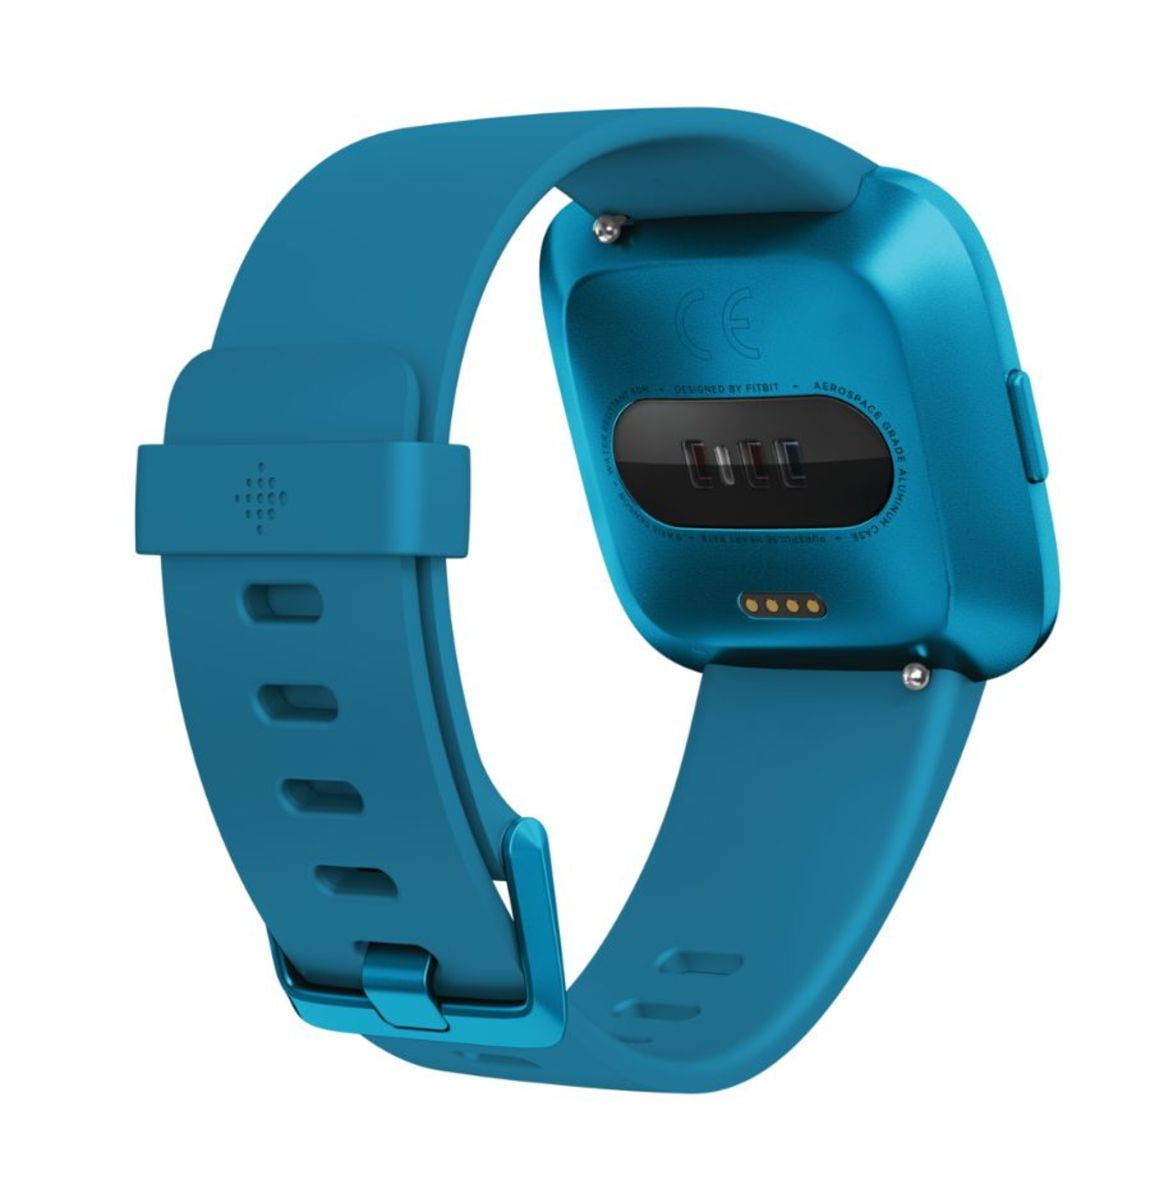 fitbit versa lite edition swimproof smartwatch